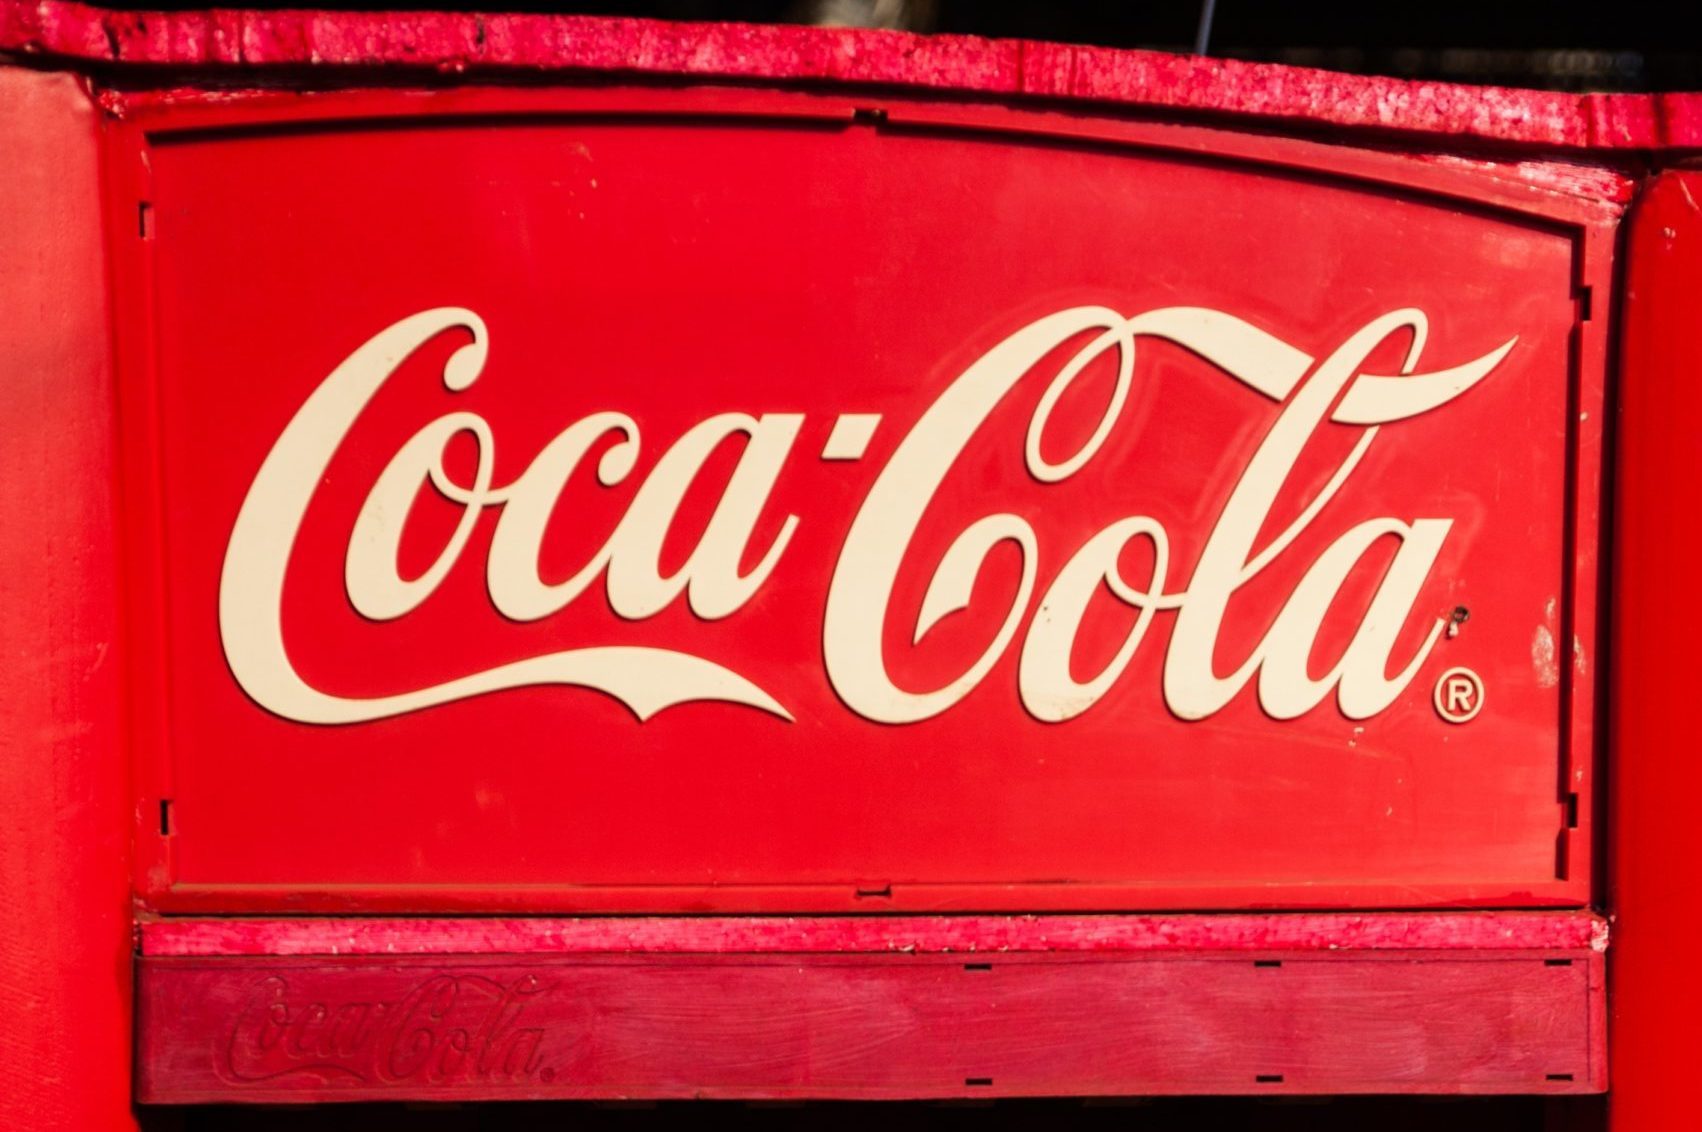 South Africa's Biggest Collector of Coca-Cola Memorabilia